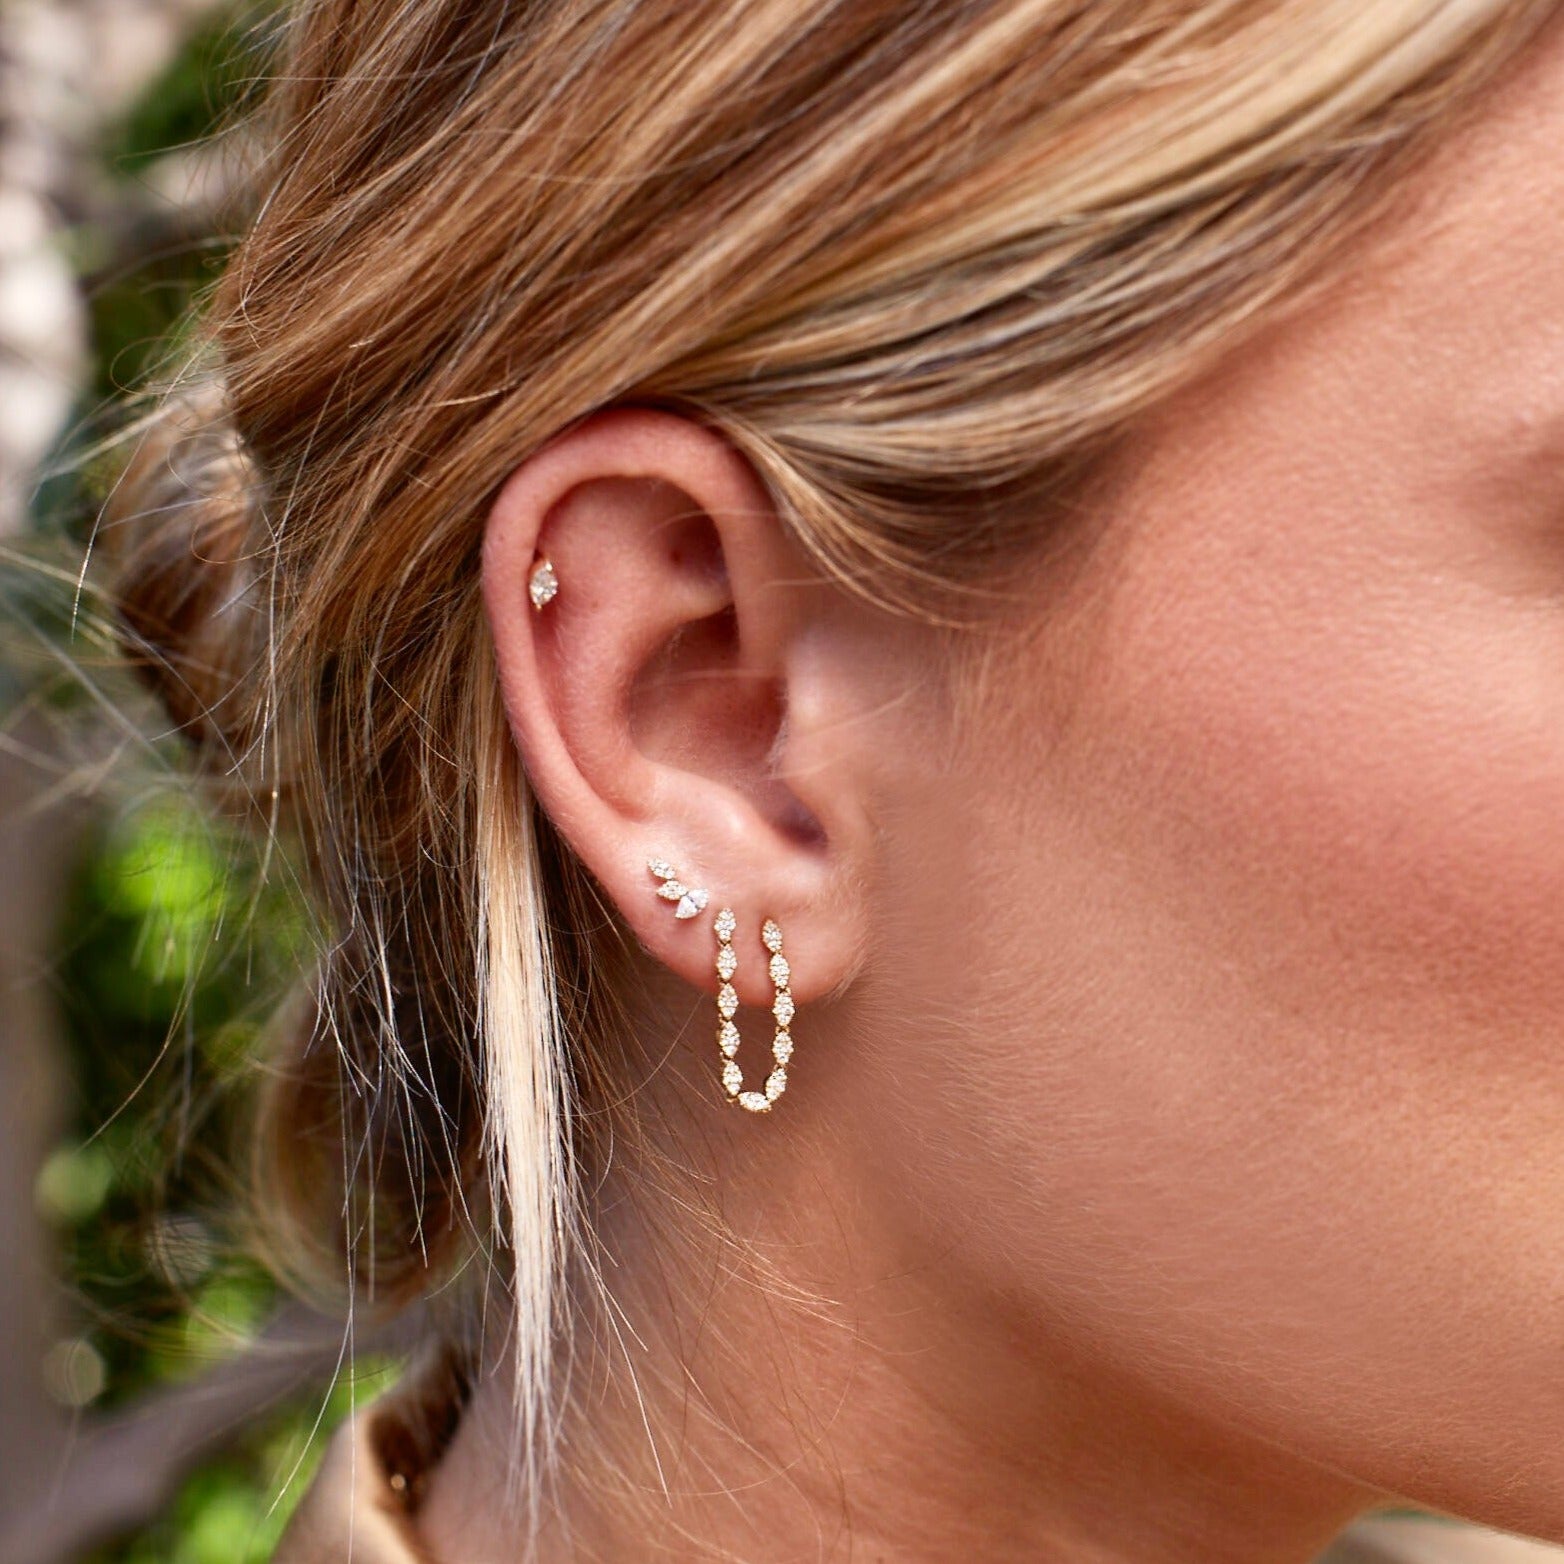 Single Pavé Diamond Marquise Double Stud Earring styled on ear of model